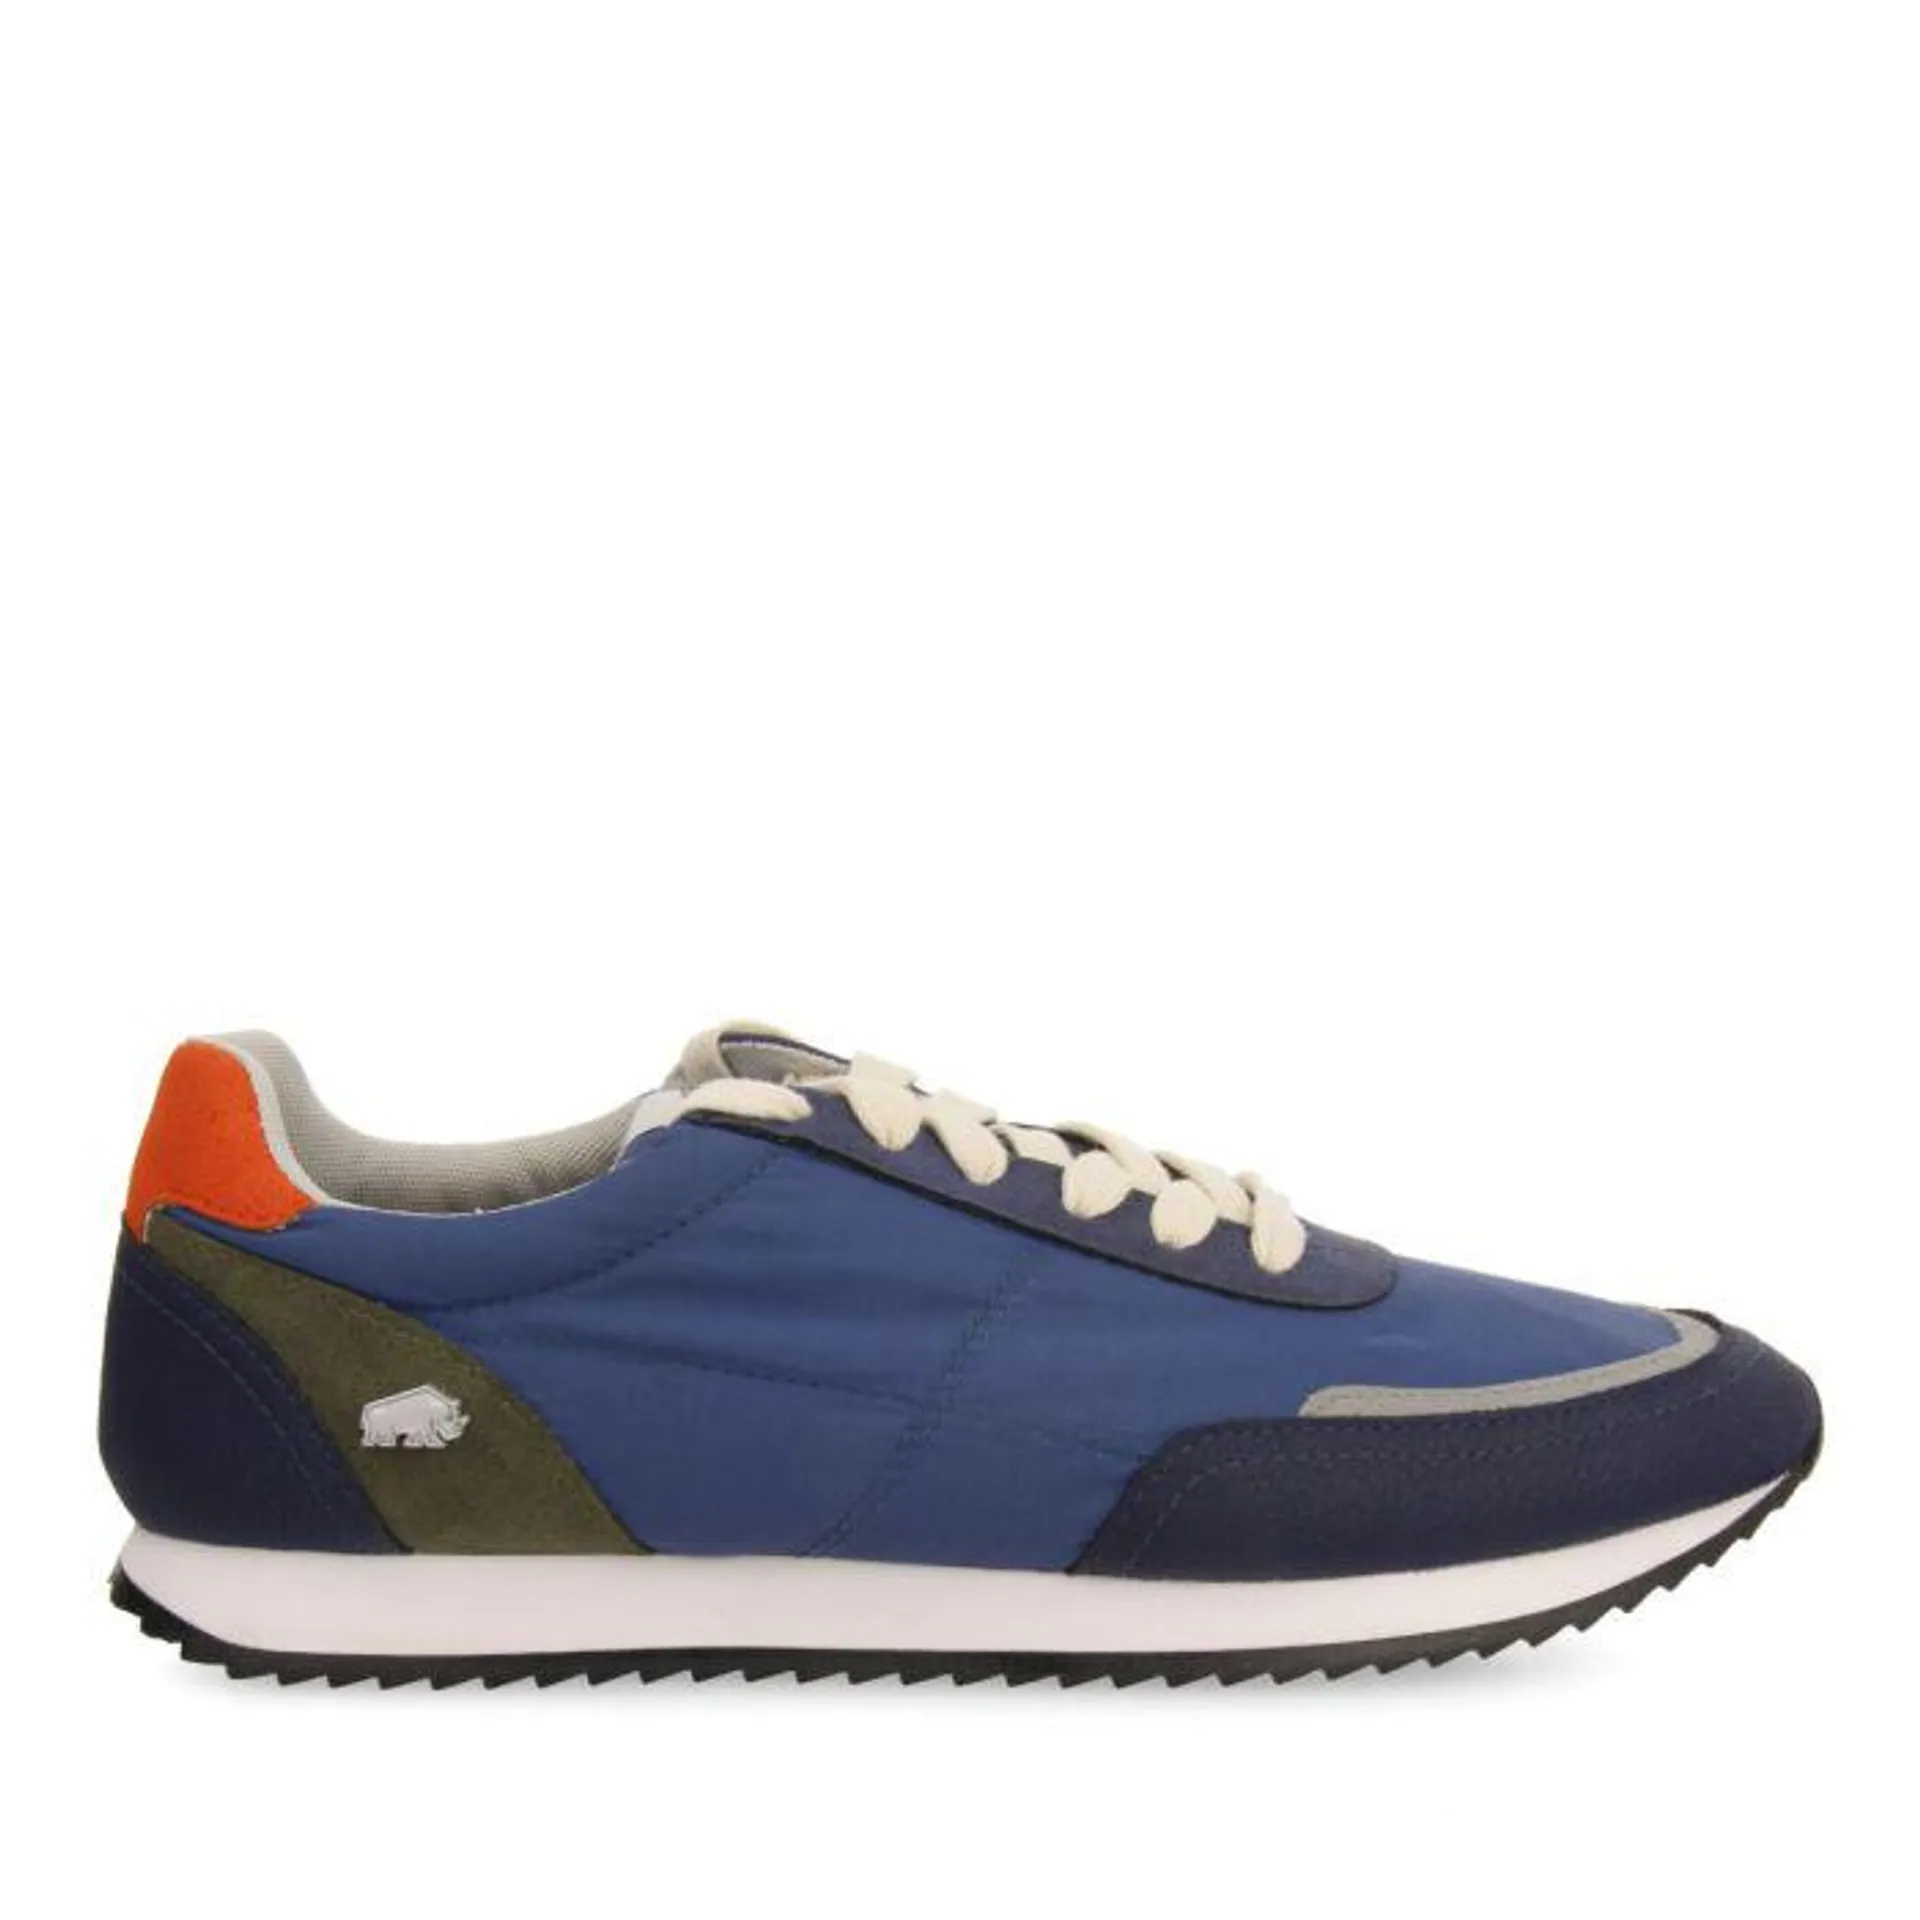 Zarasai men's blue sneakers with orange details